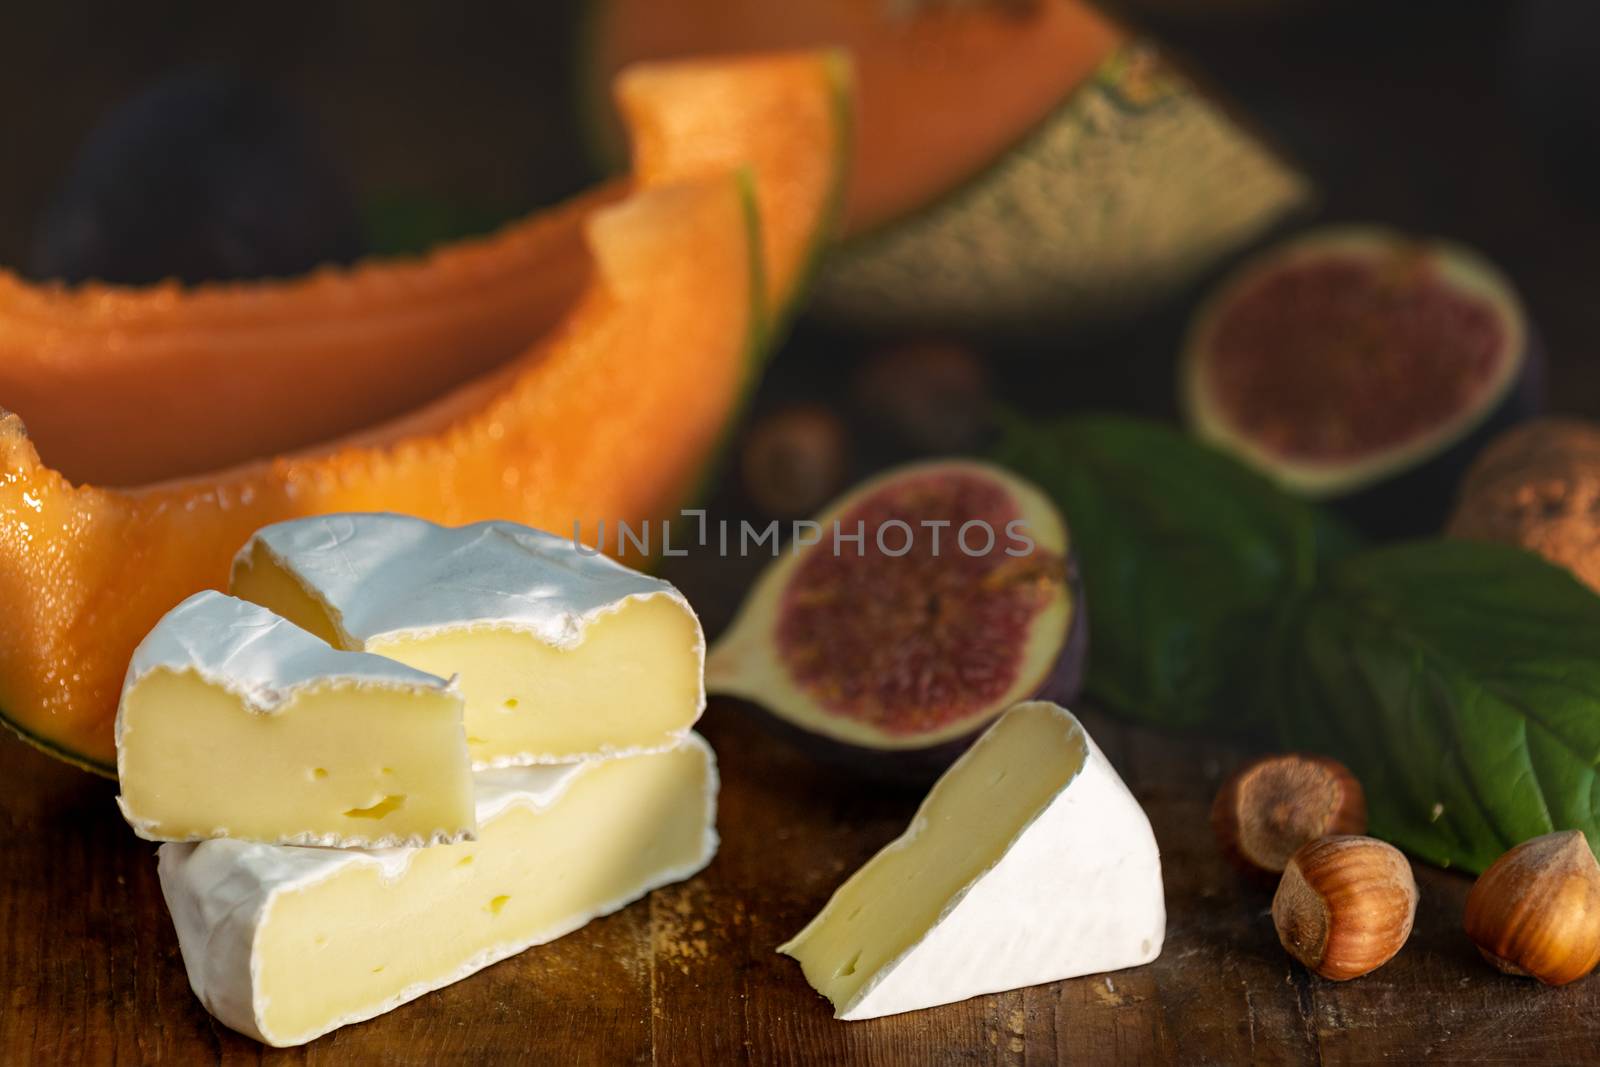 Cantaloupe melon sliced with Camembert by ArtSvitlyna